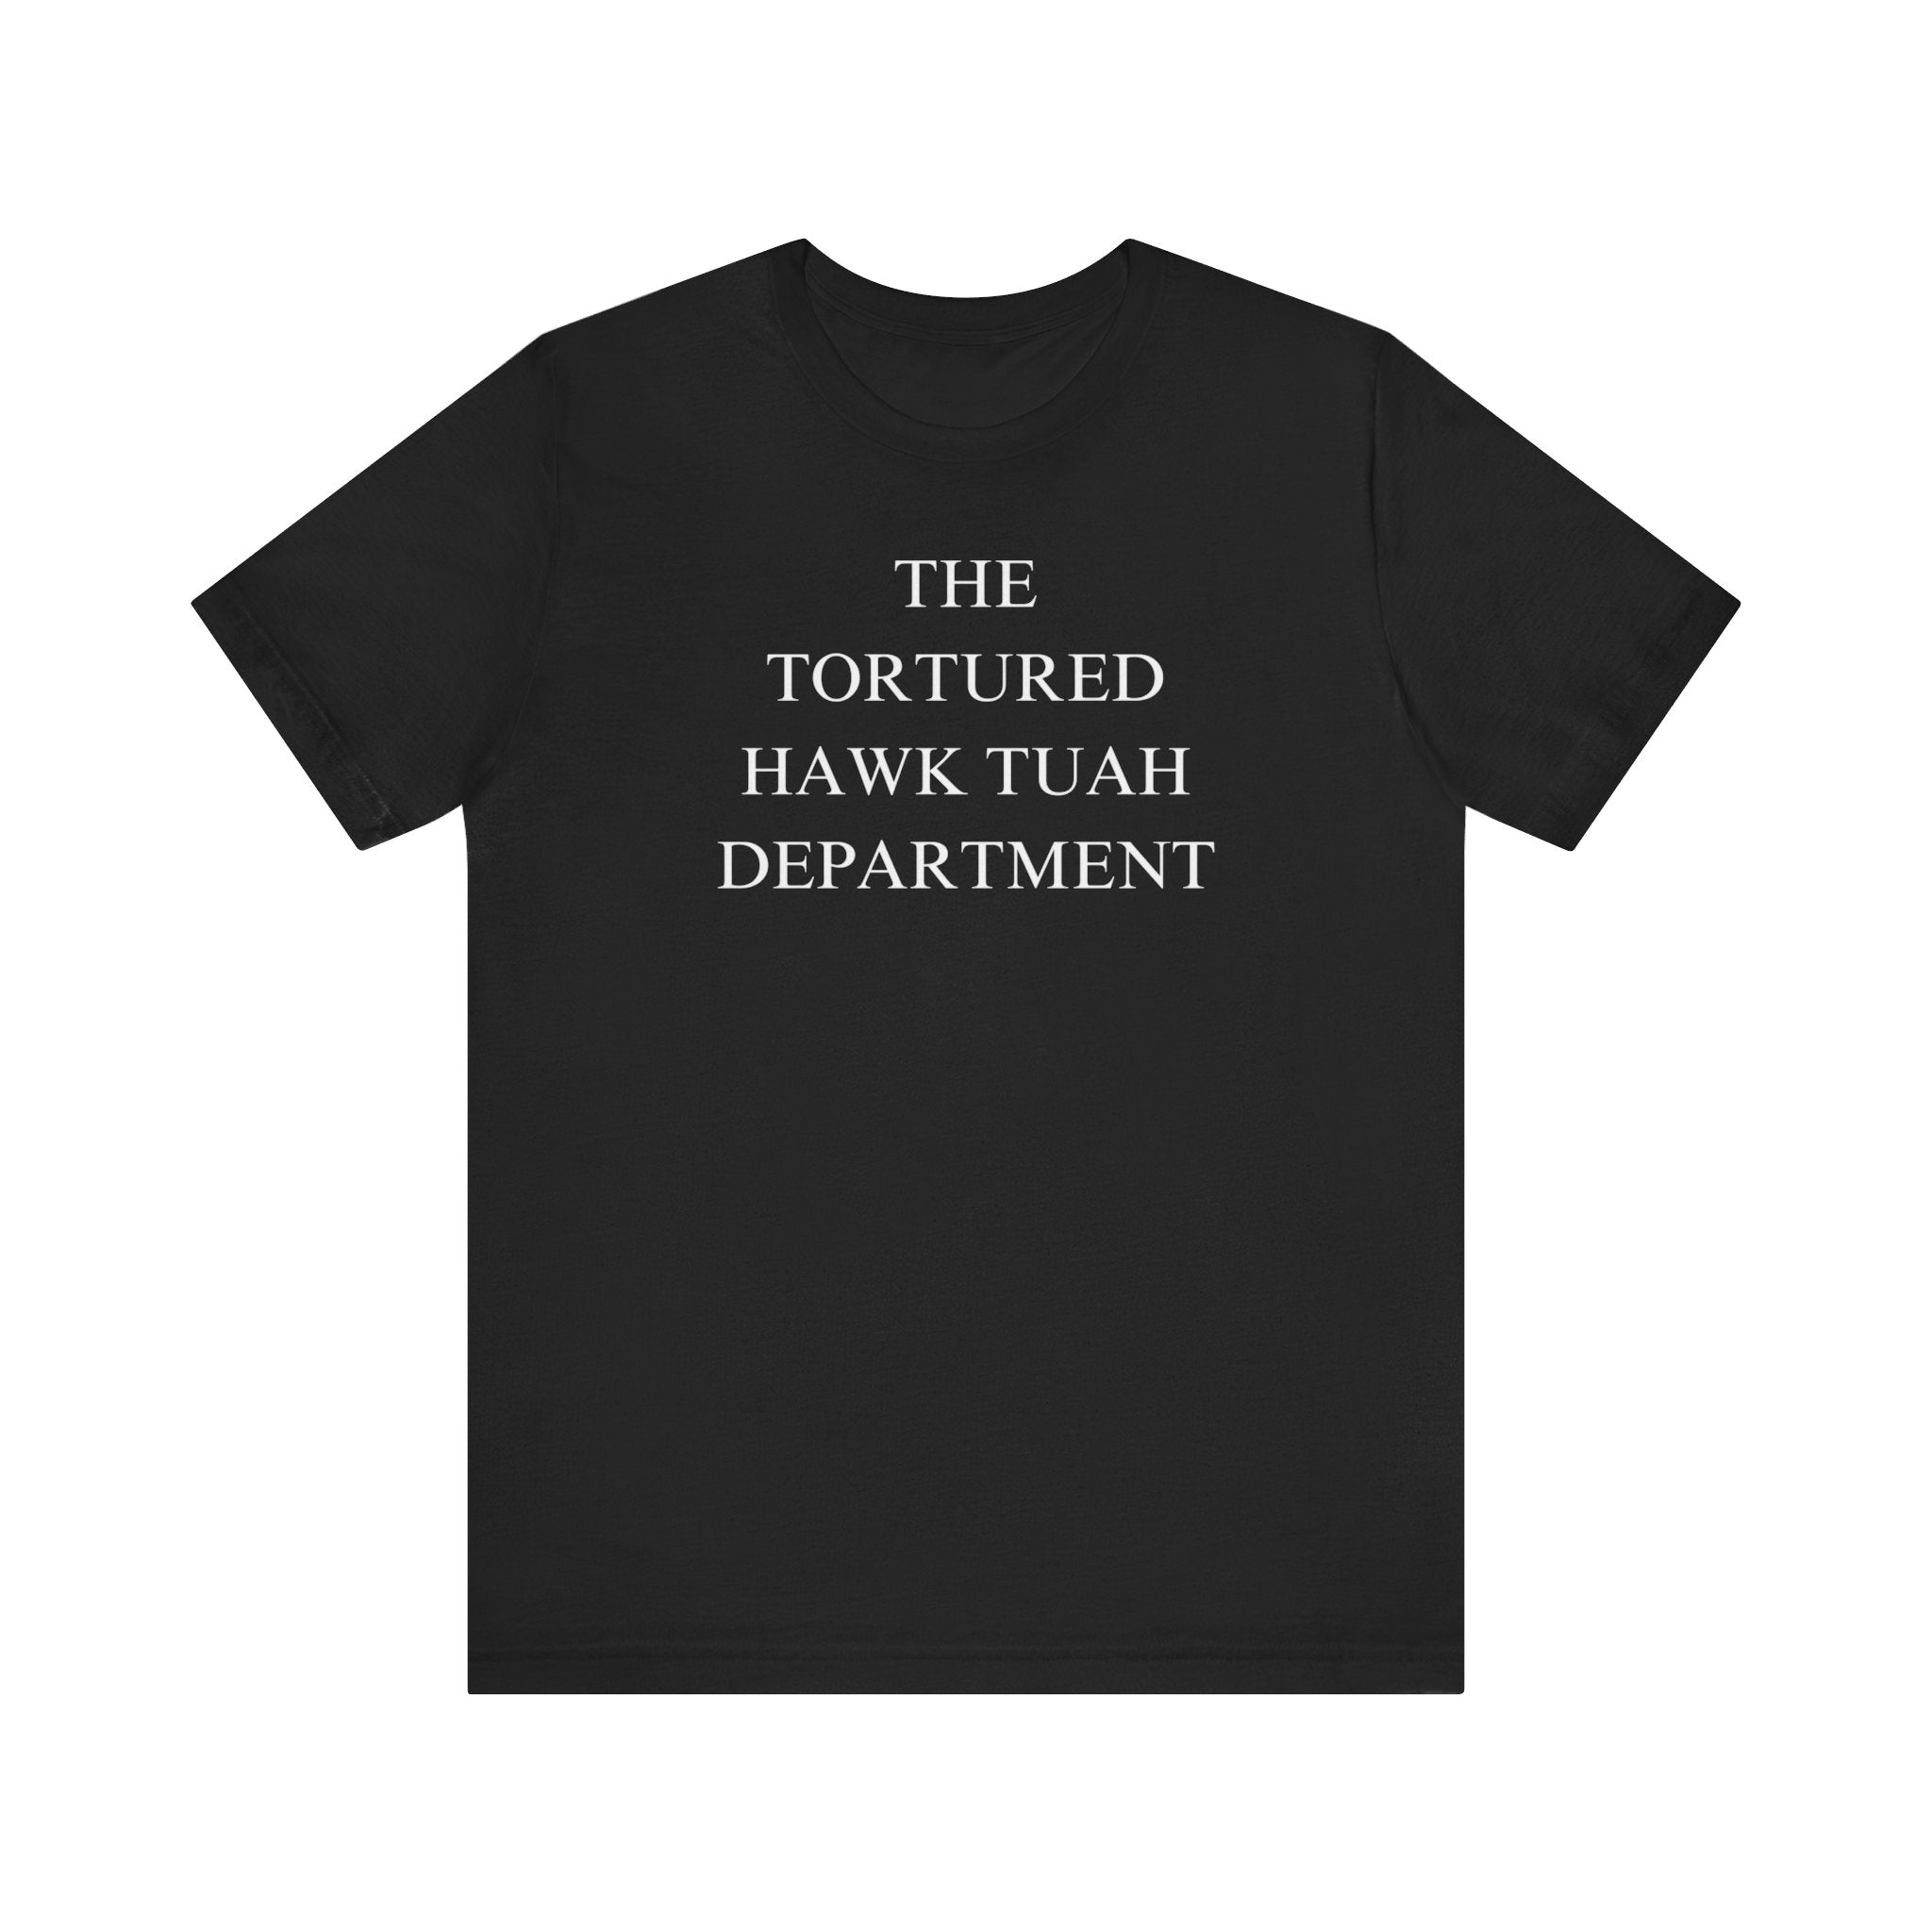 The Tortured Hawk Tuah Department